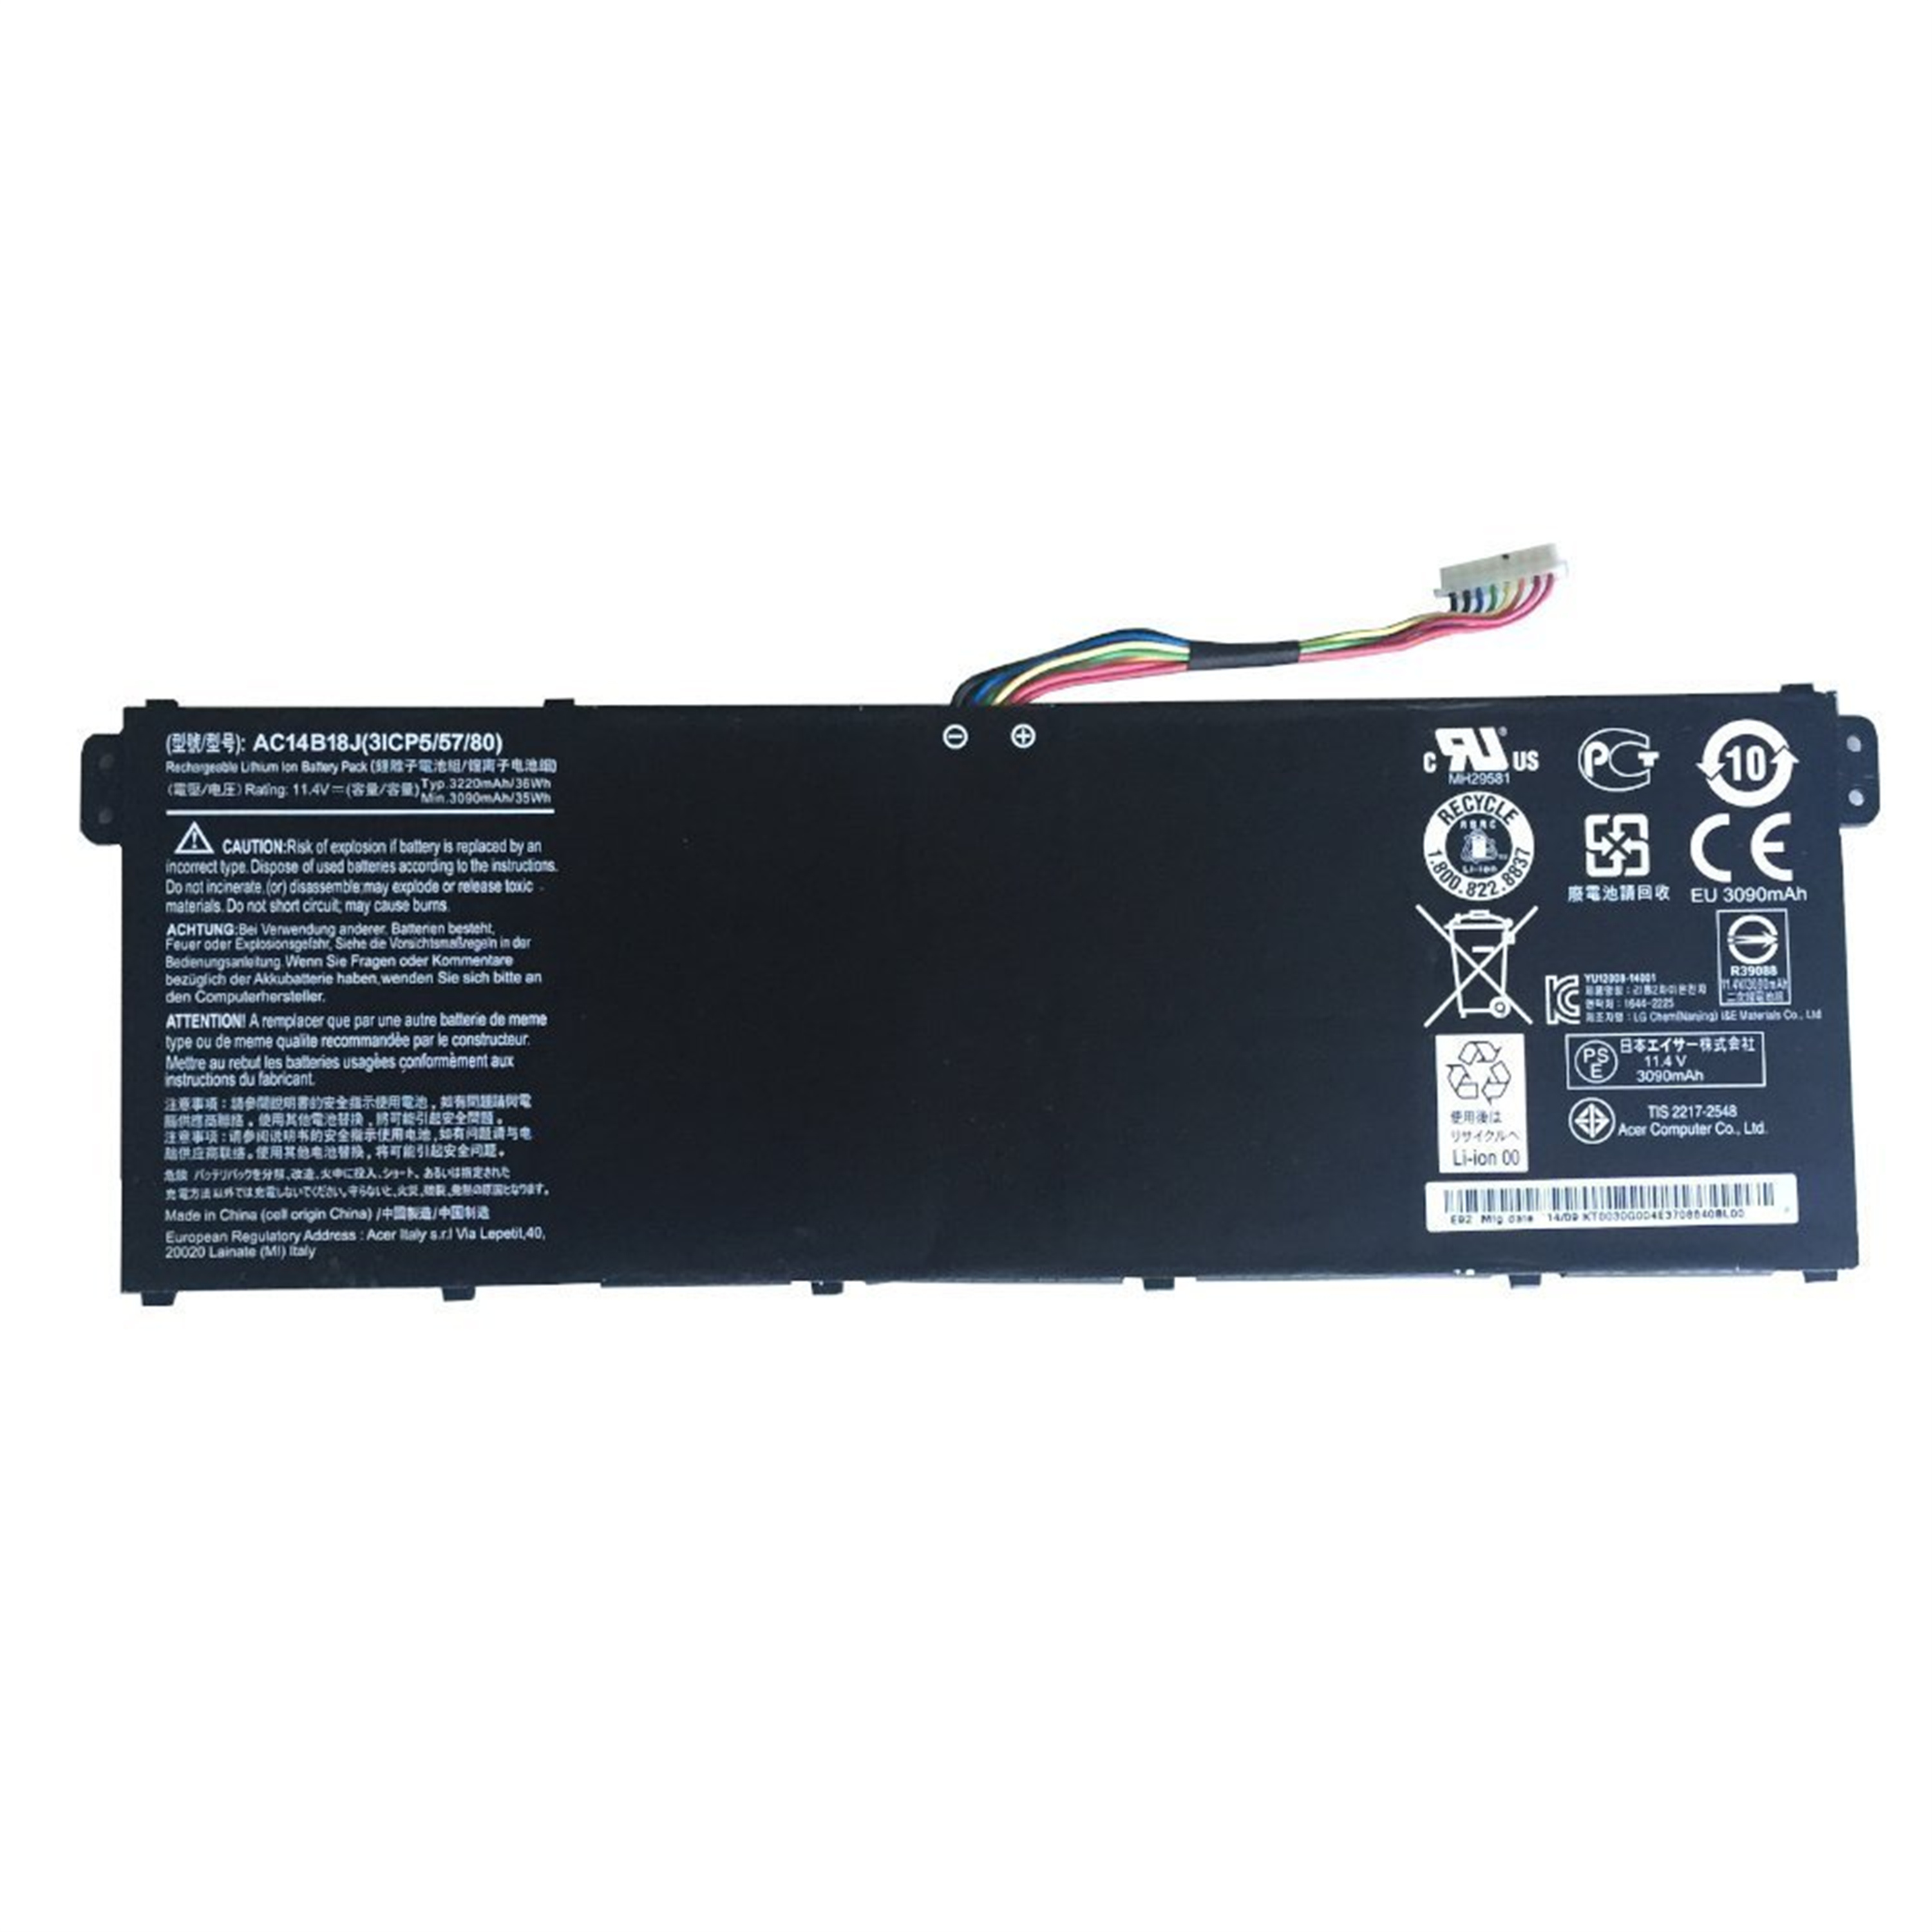 Best Seller OEM Manufacturer laptop battery lithium ion batteries AC14B18J for Acer V3-372-77FS P47B 557T 57NM V3-371-30FA Aspire E3-111